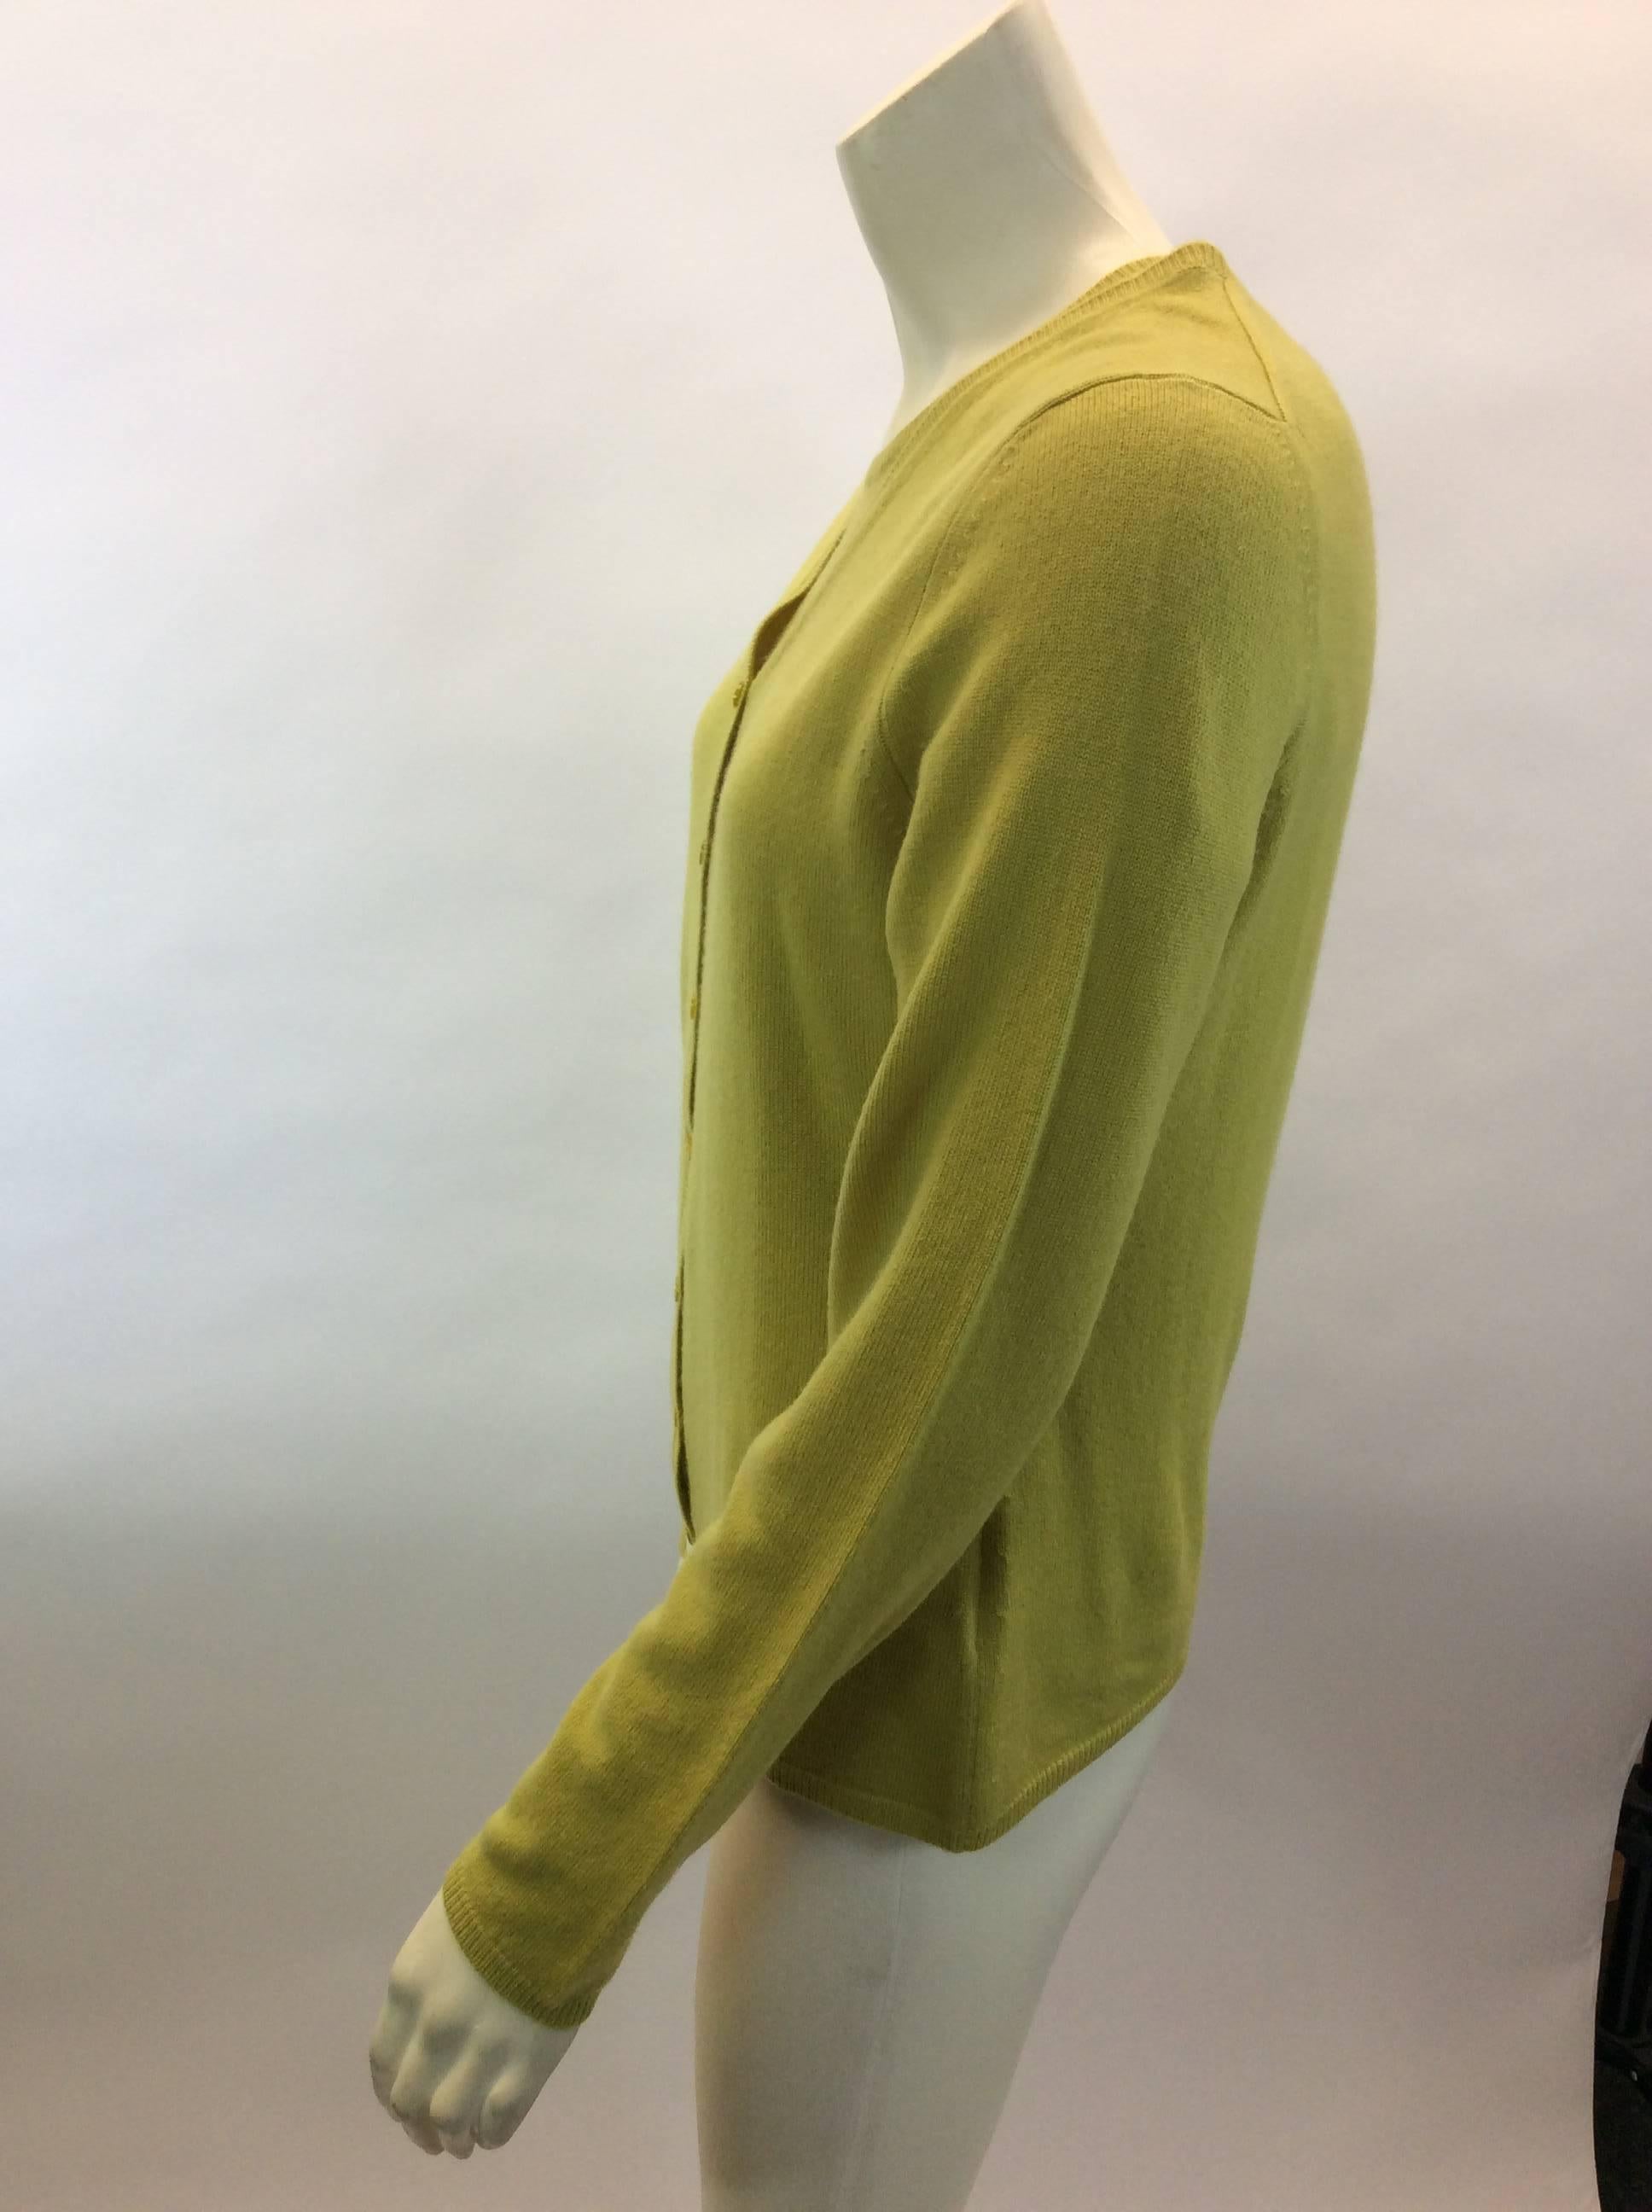 Burberry Green Two Piece Cashmere Cardigan Set
$199
100% Cashmere
Made in Hong Kong
Size Medium
Shirt: 
Length 22